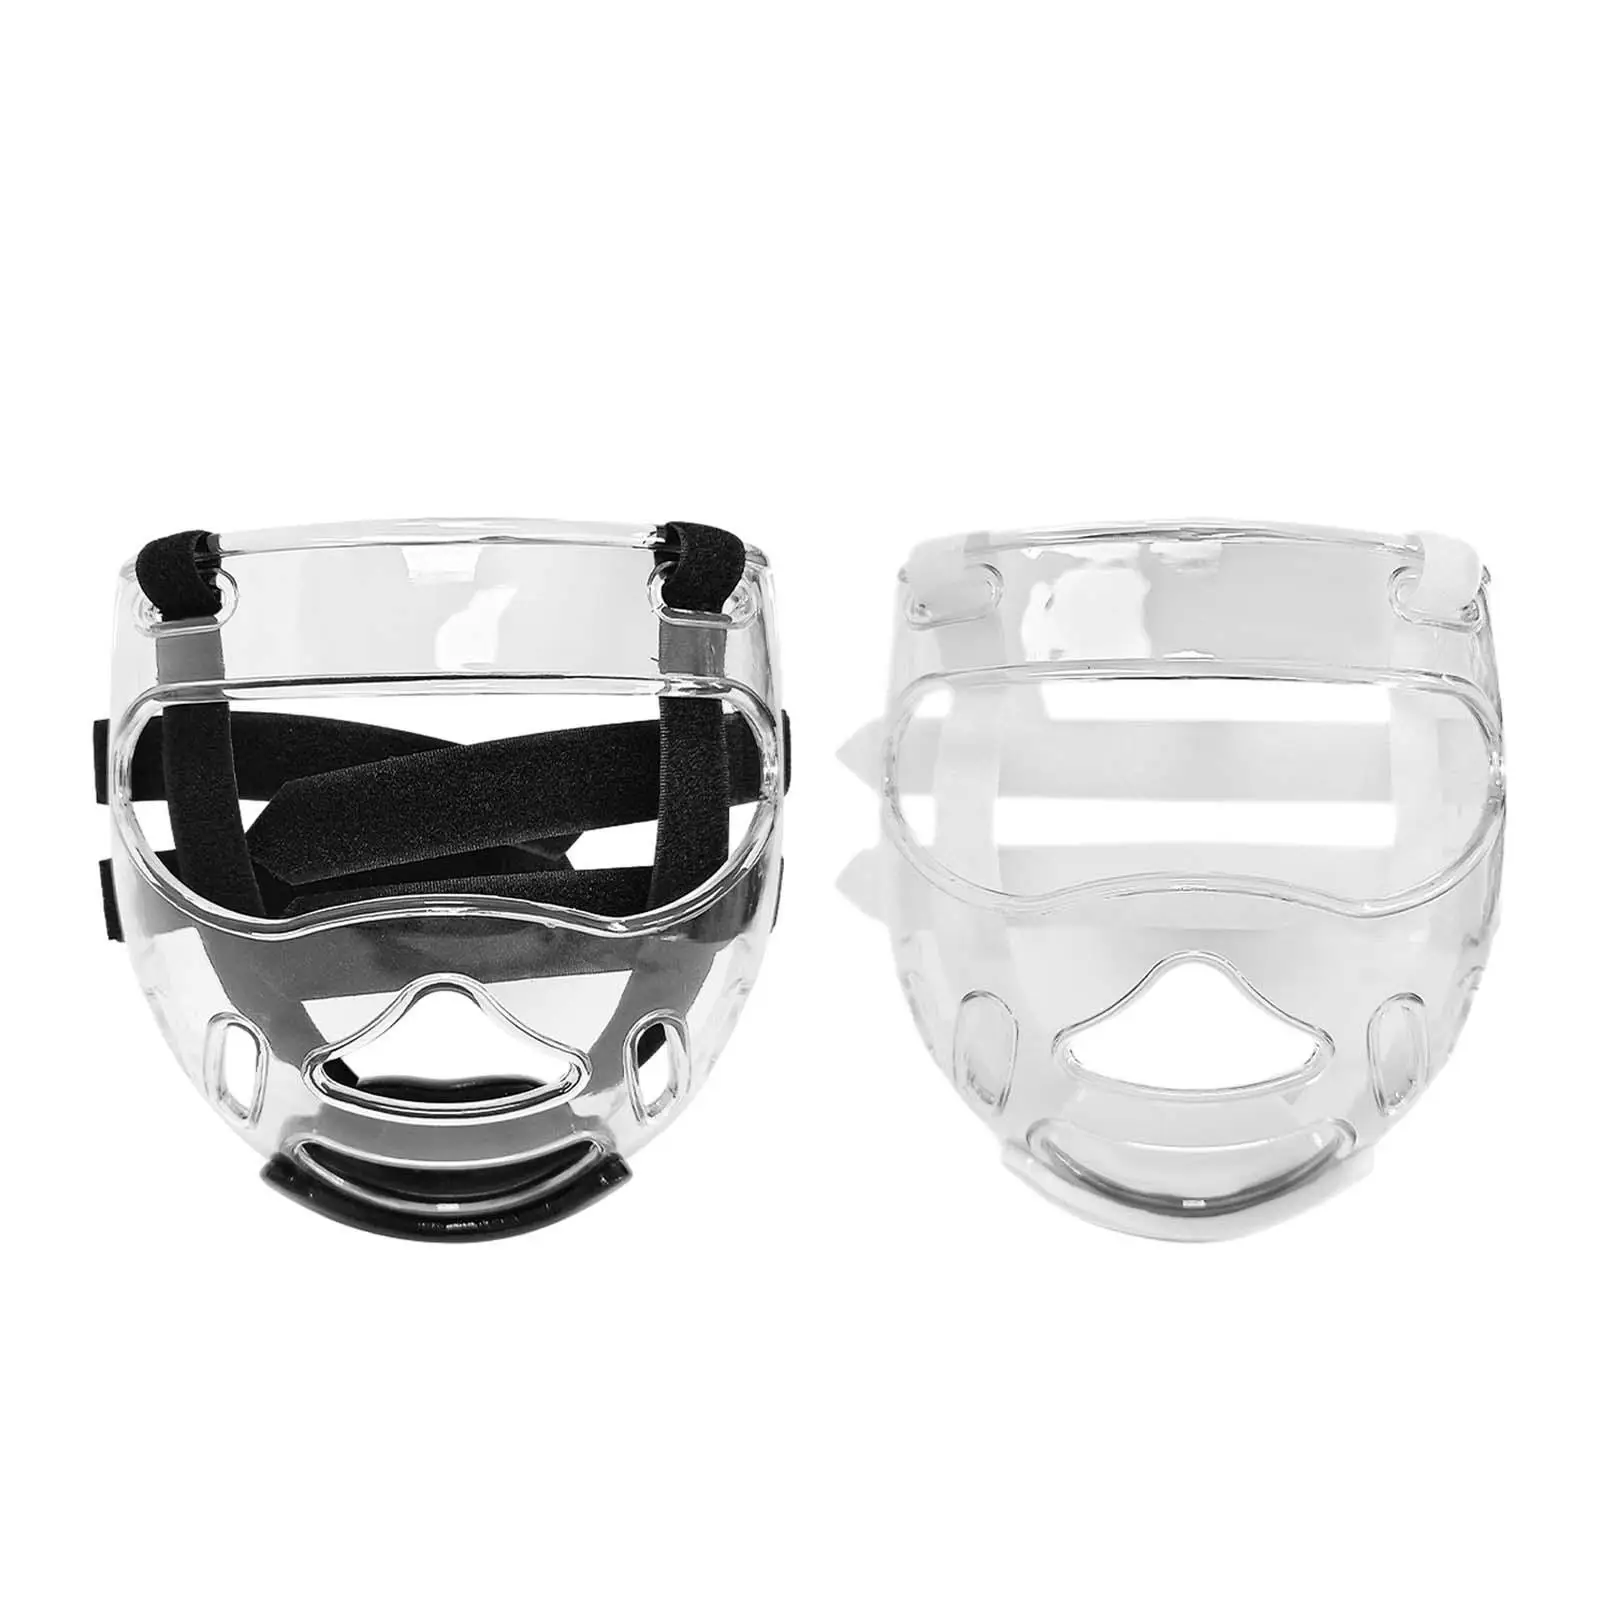 Taekwondo Mask Taekwondo Face Shield Boxing Headgear Mask Protector Face Guard for Sparring Grappling Karate Muay Thai Wrestling